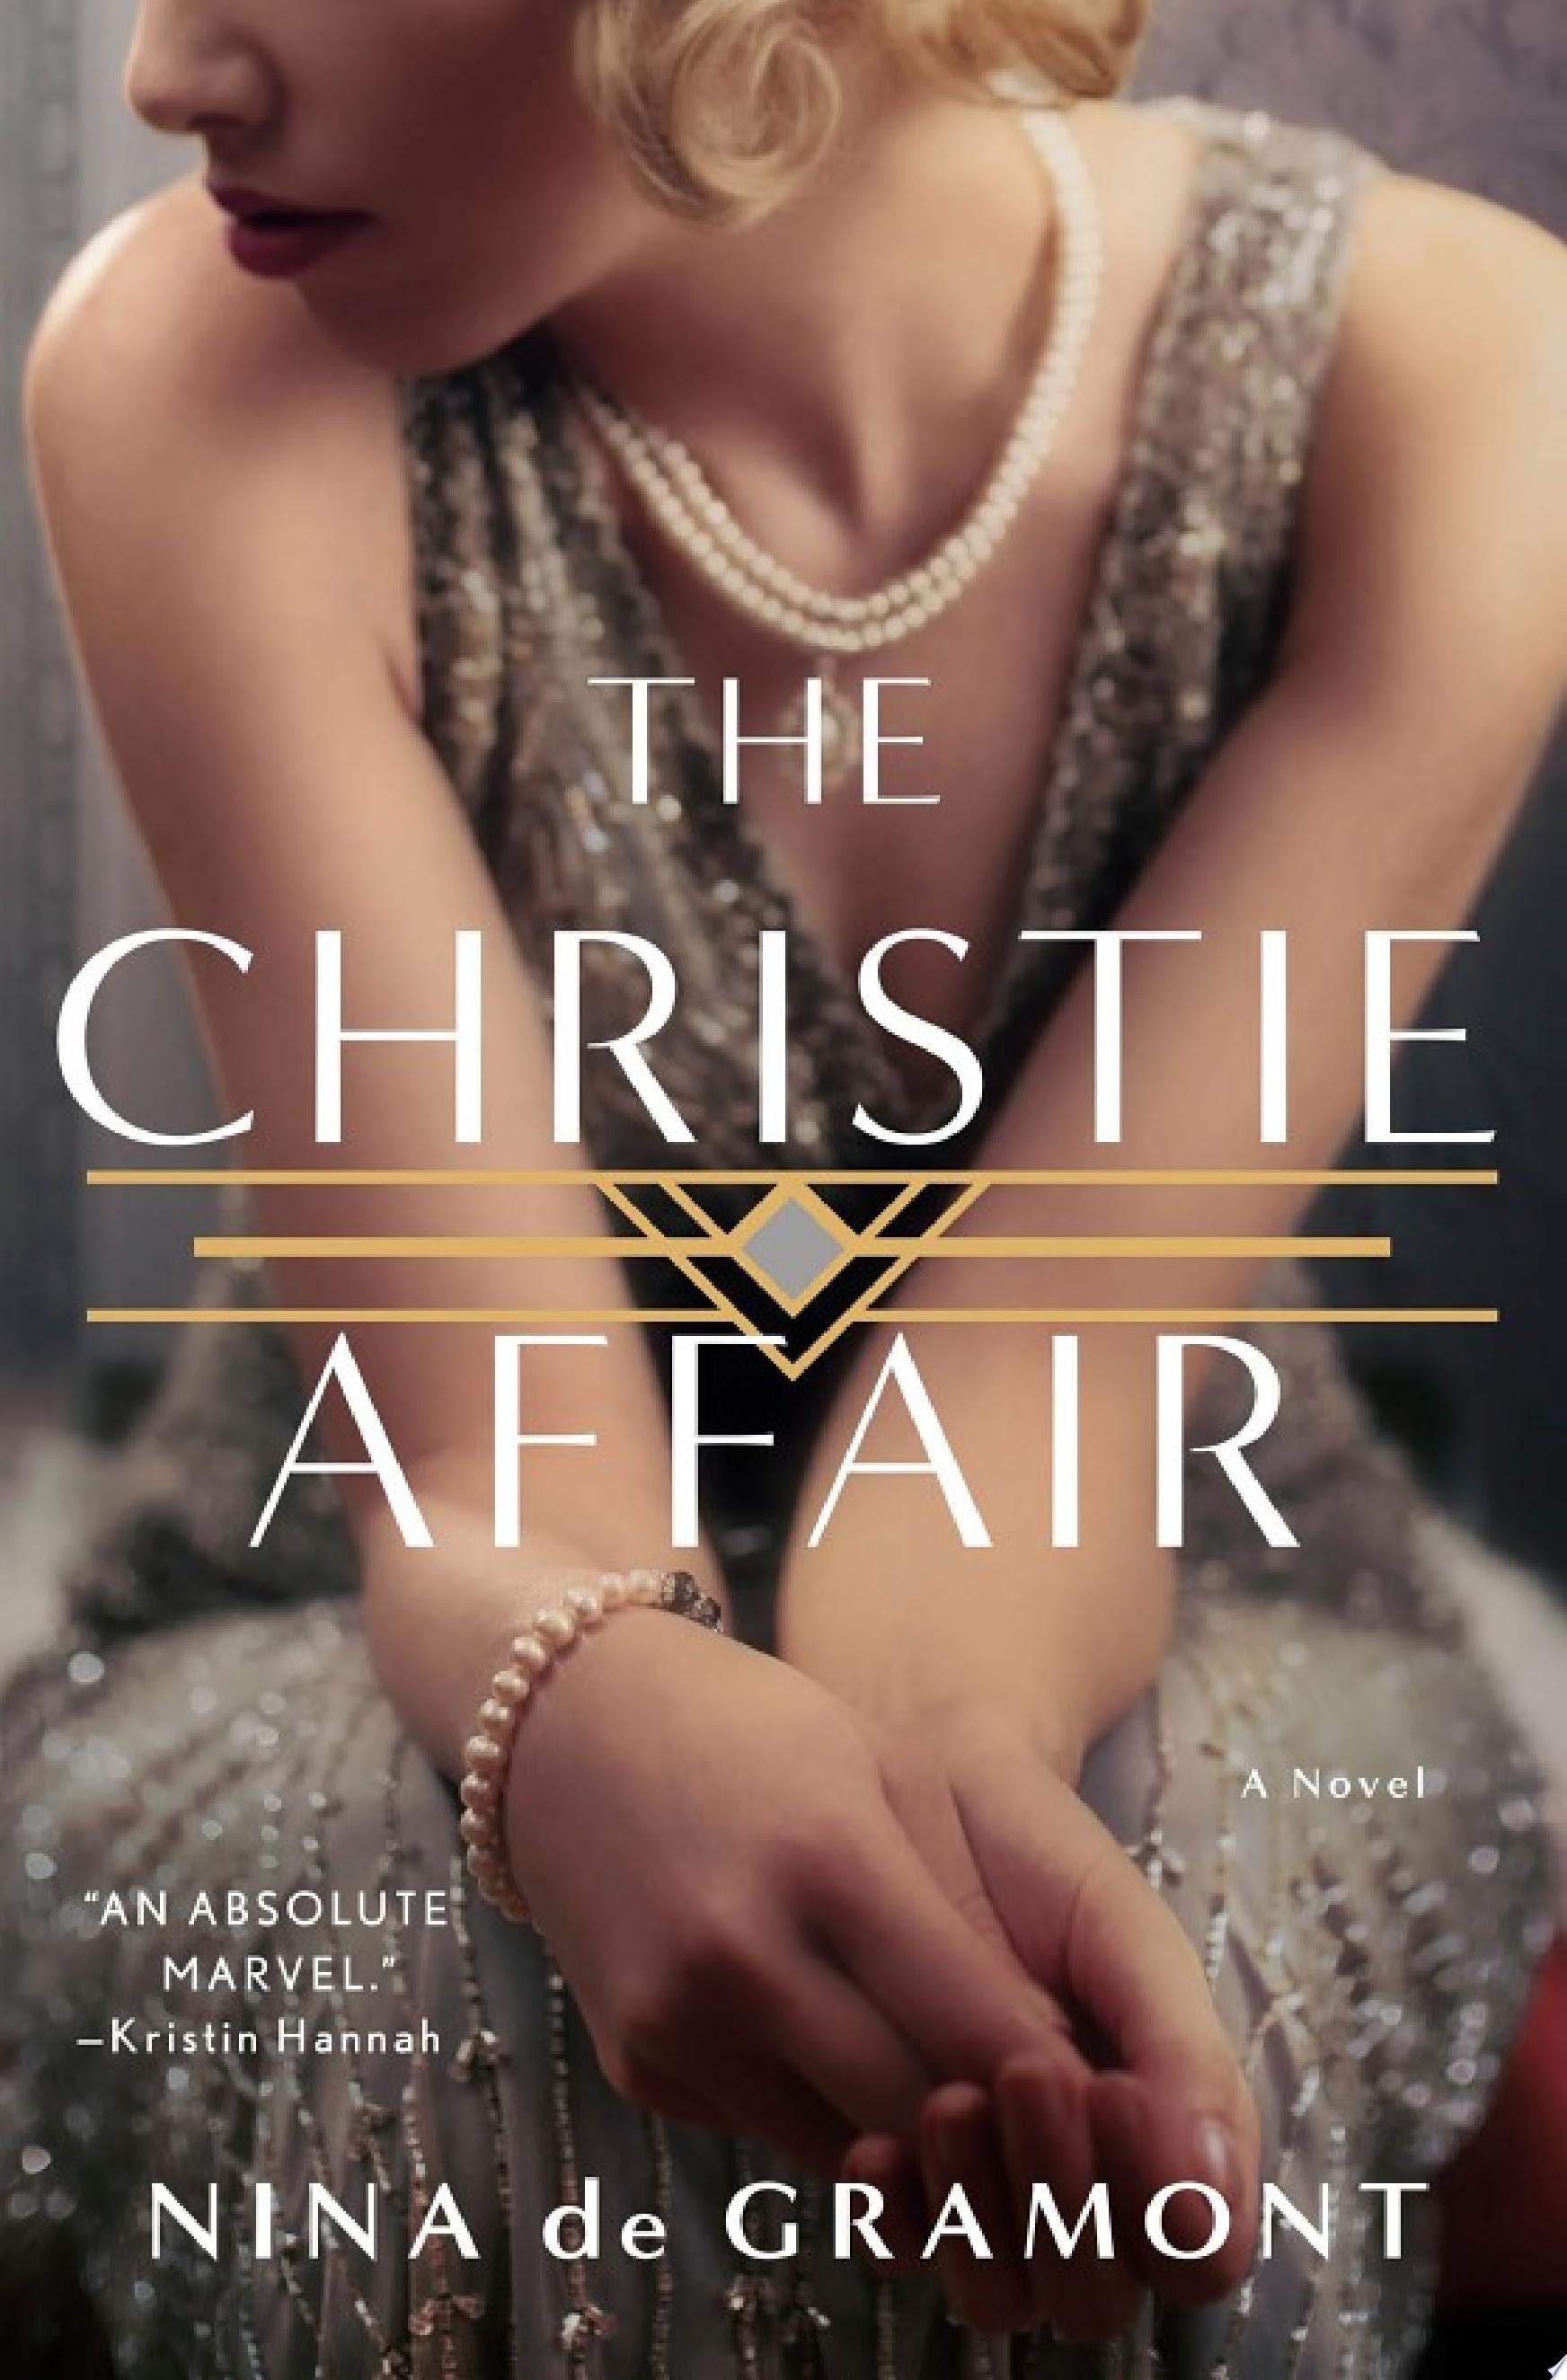 Image for "The Christie Affair"